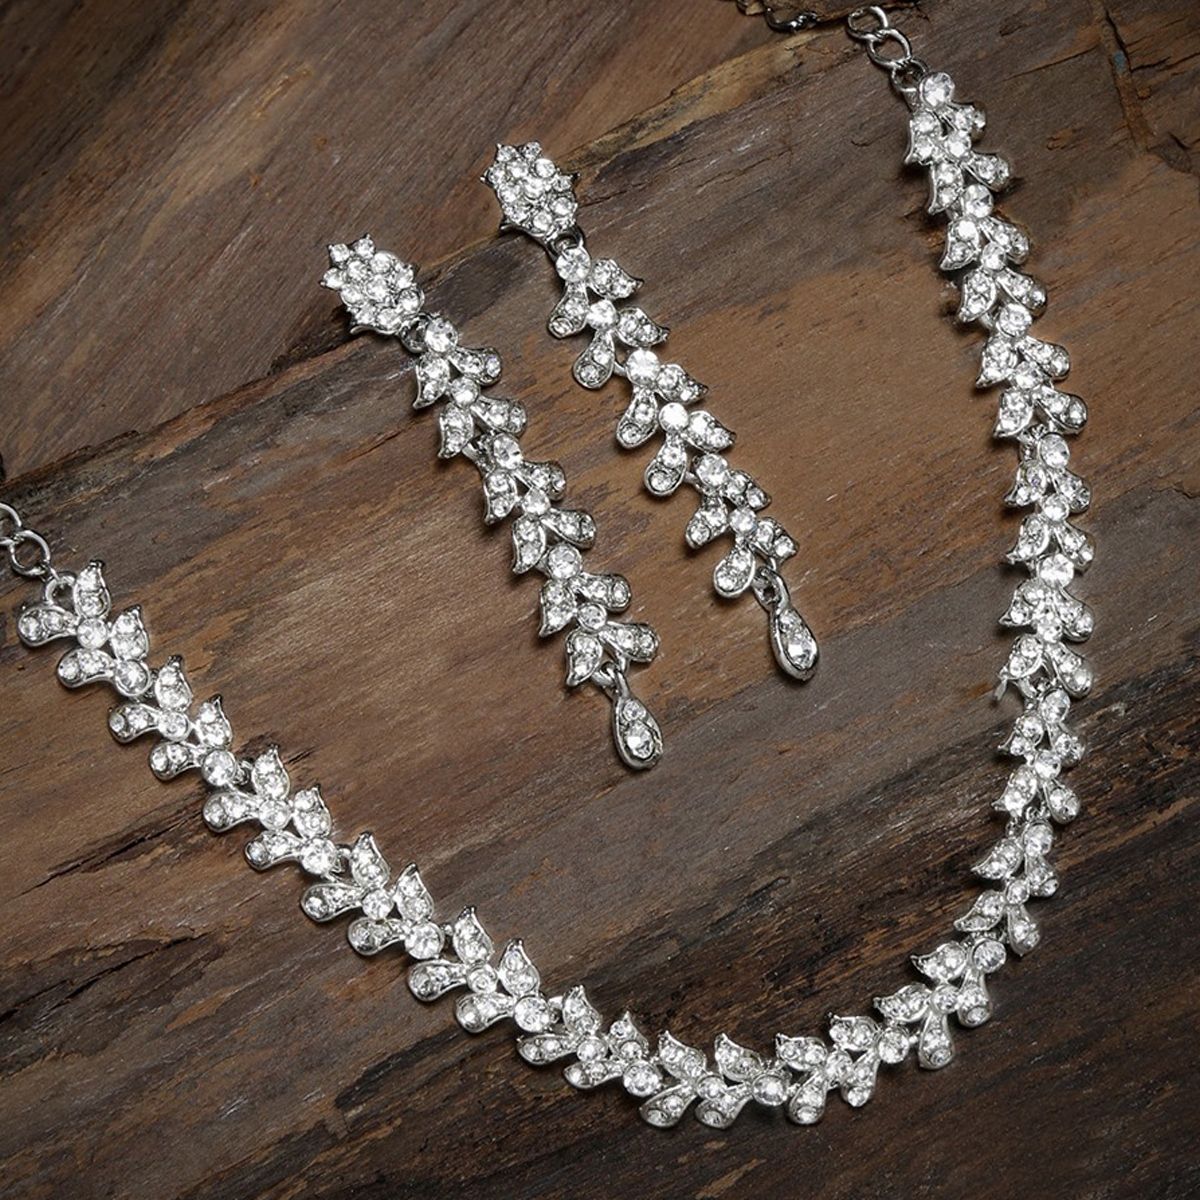 Crystal Rhinestone Diamante Necklace & Earring Set Wedding Jewelry |  Uniqistic.com | Bridal jewelry sets, Prom jewelry, Bridesmaid jewelry sets